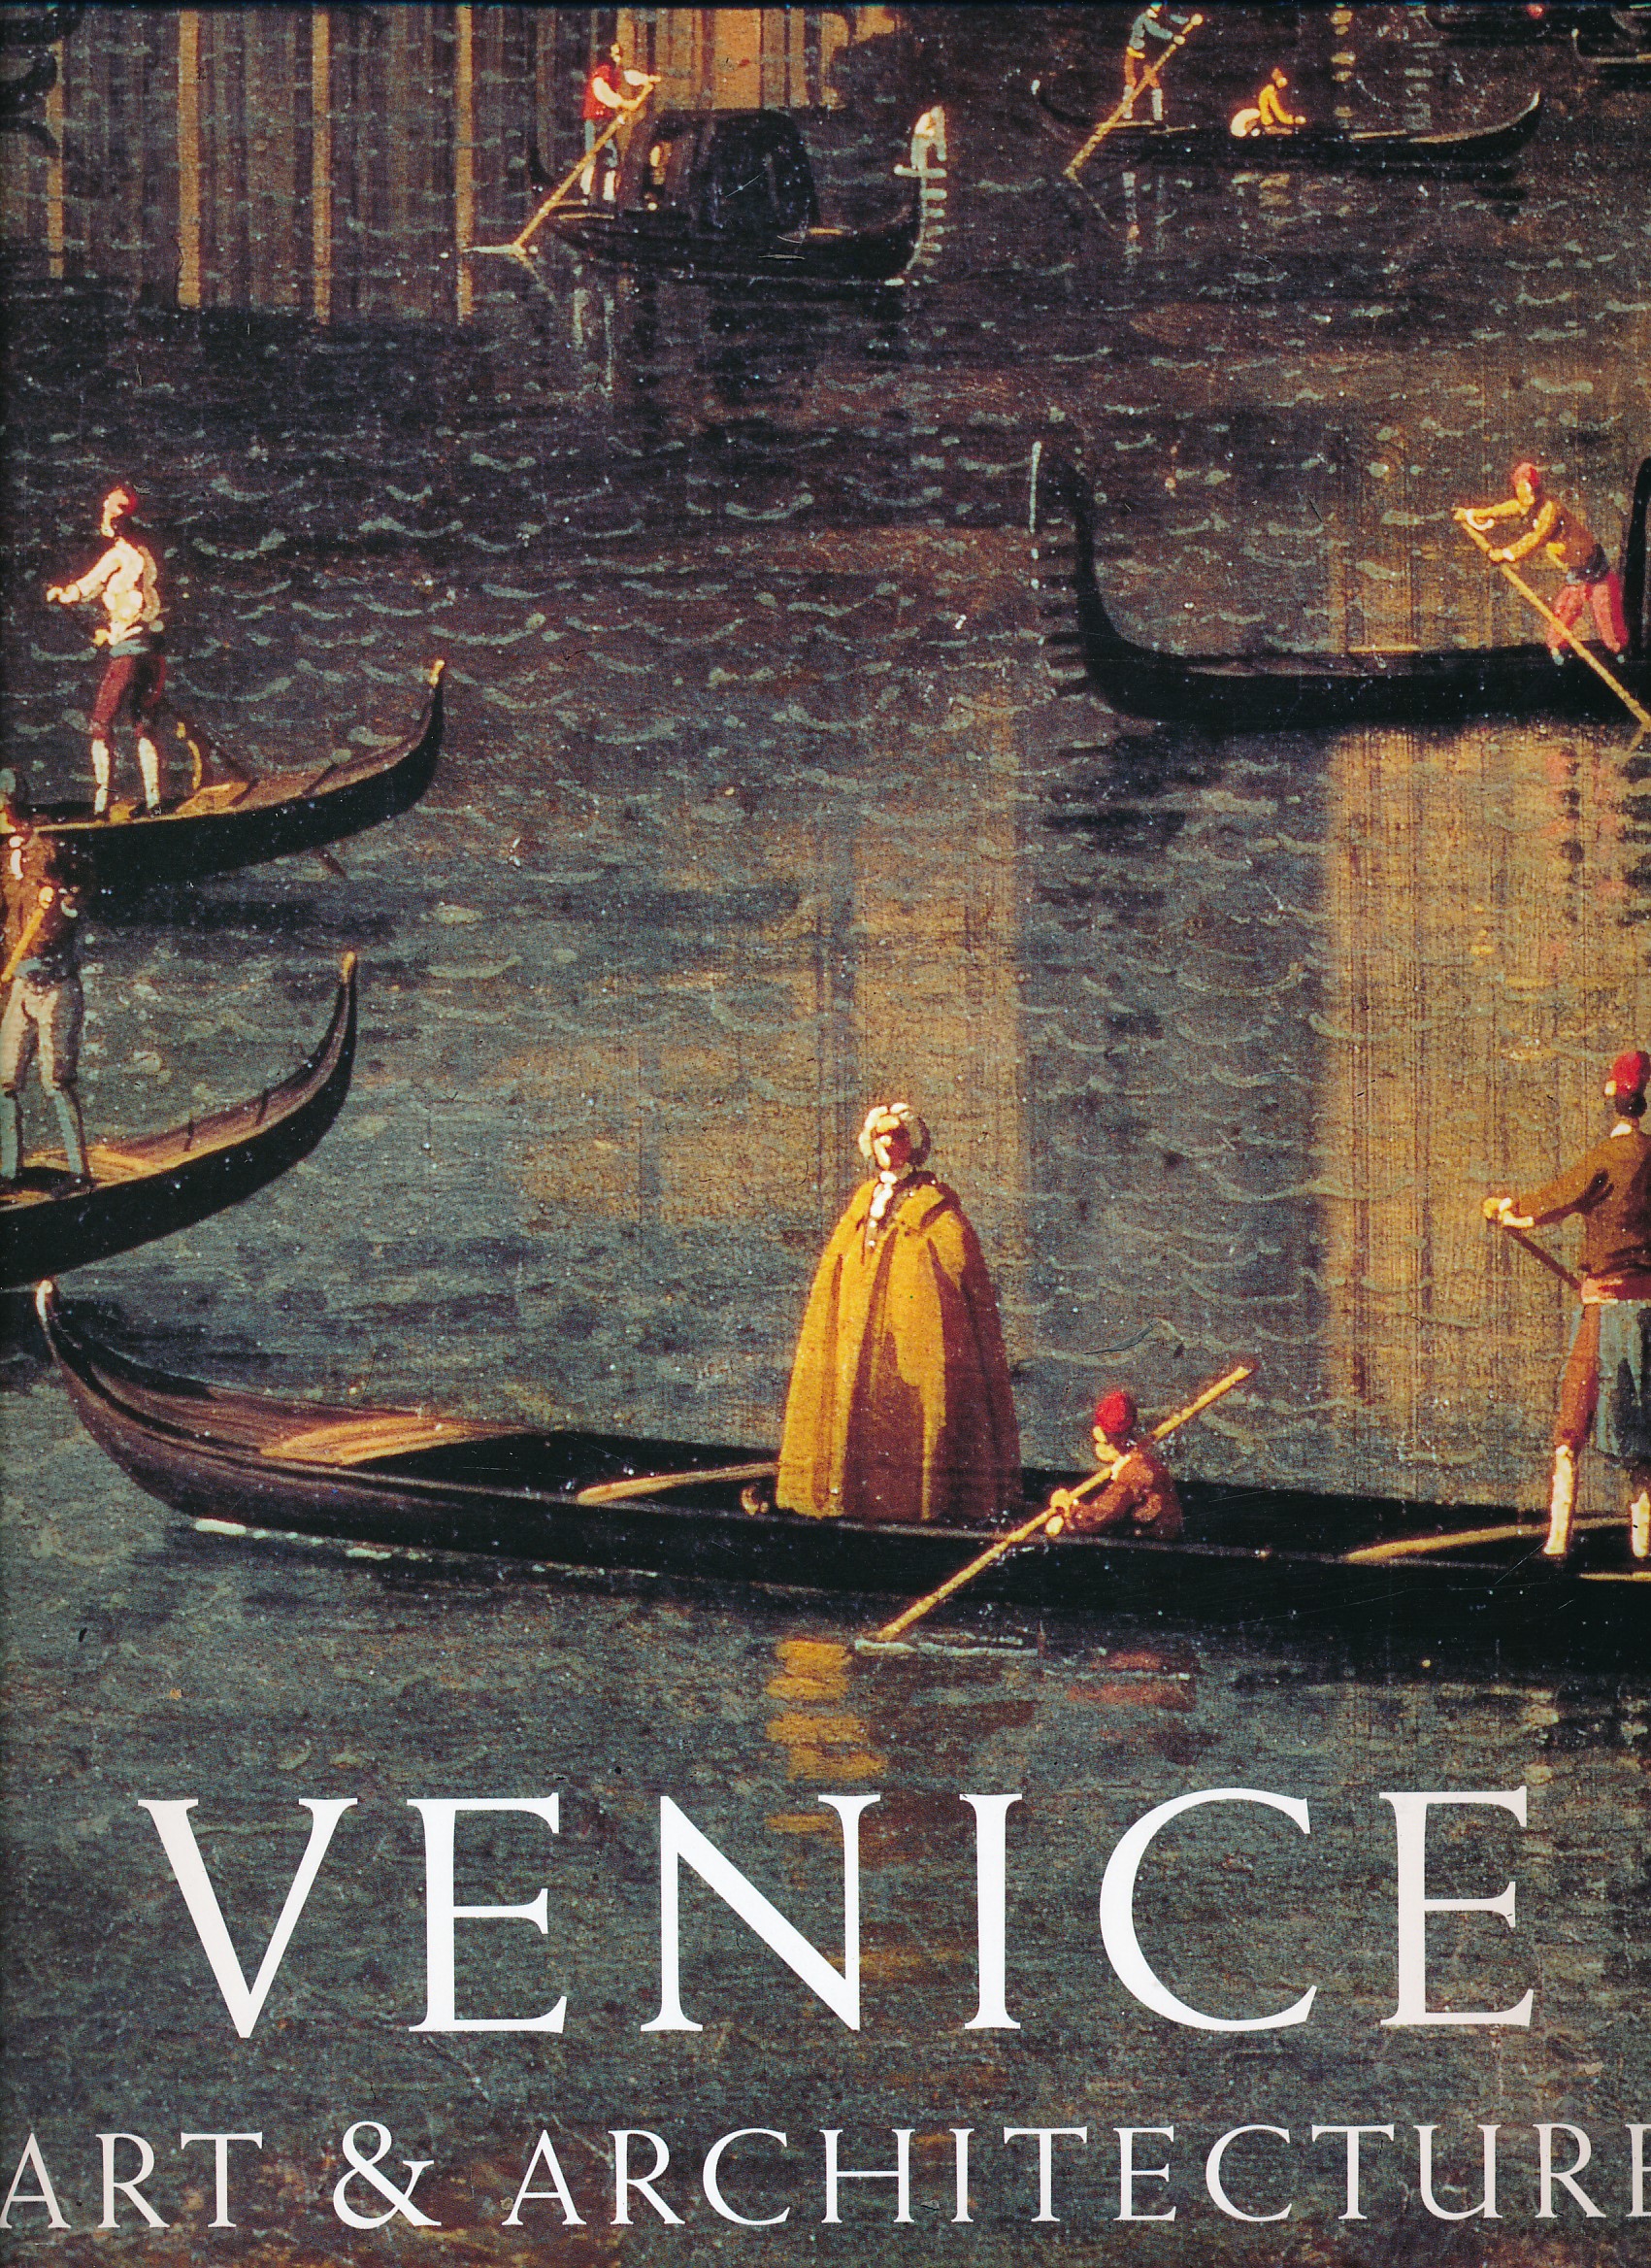 Venice Art & Architecture. 2 volume set